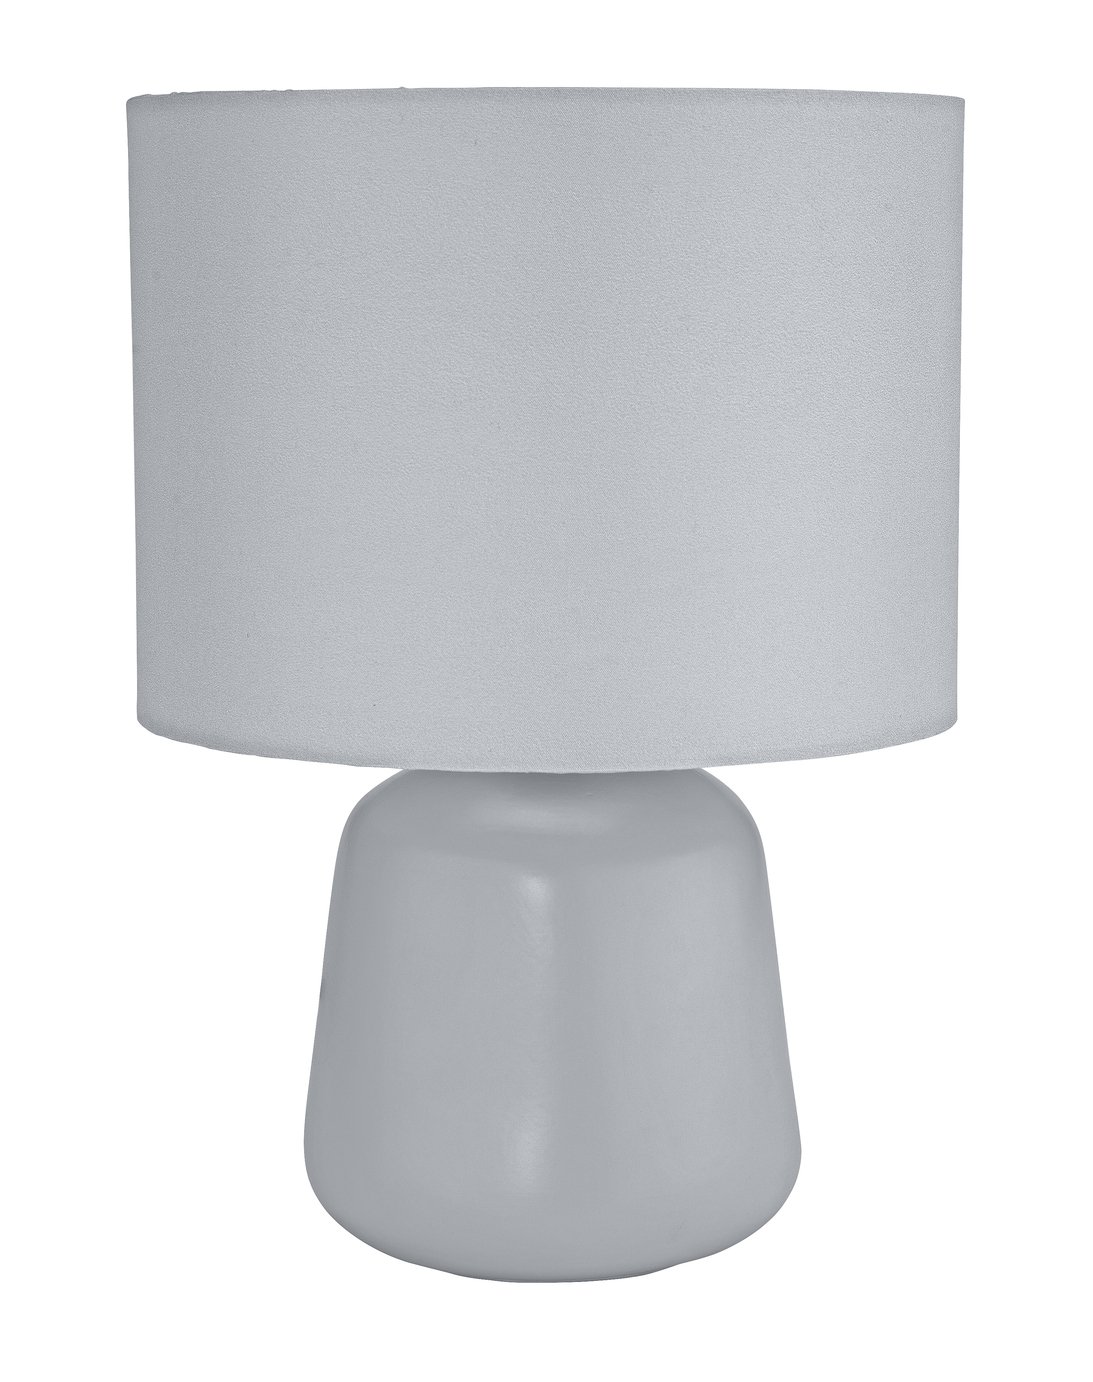 Argos Home Ceramic Table Lamp - Dove Grey